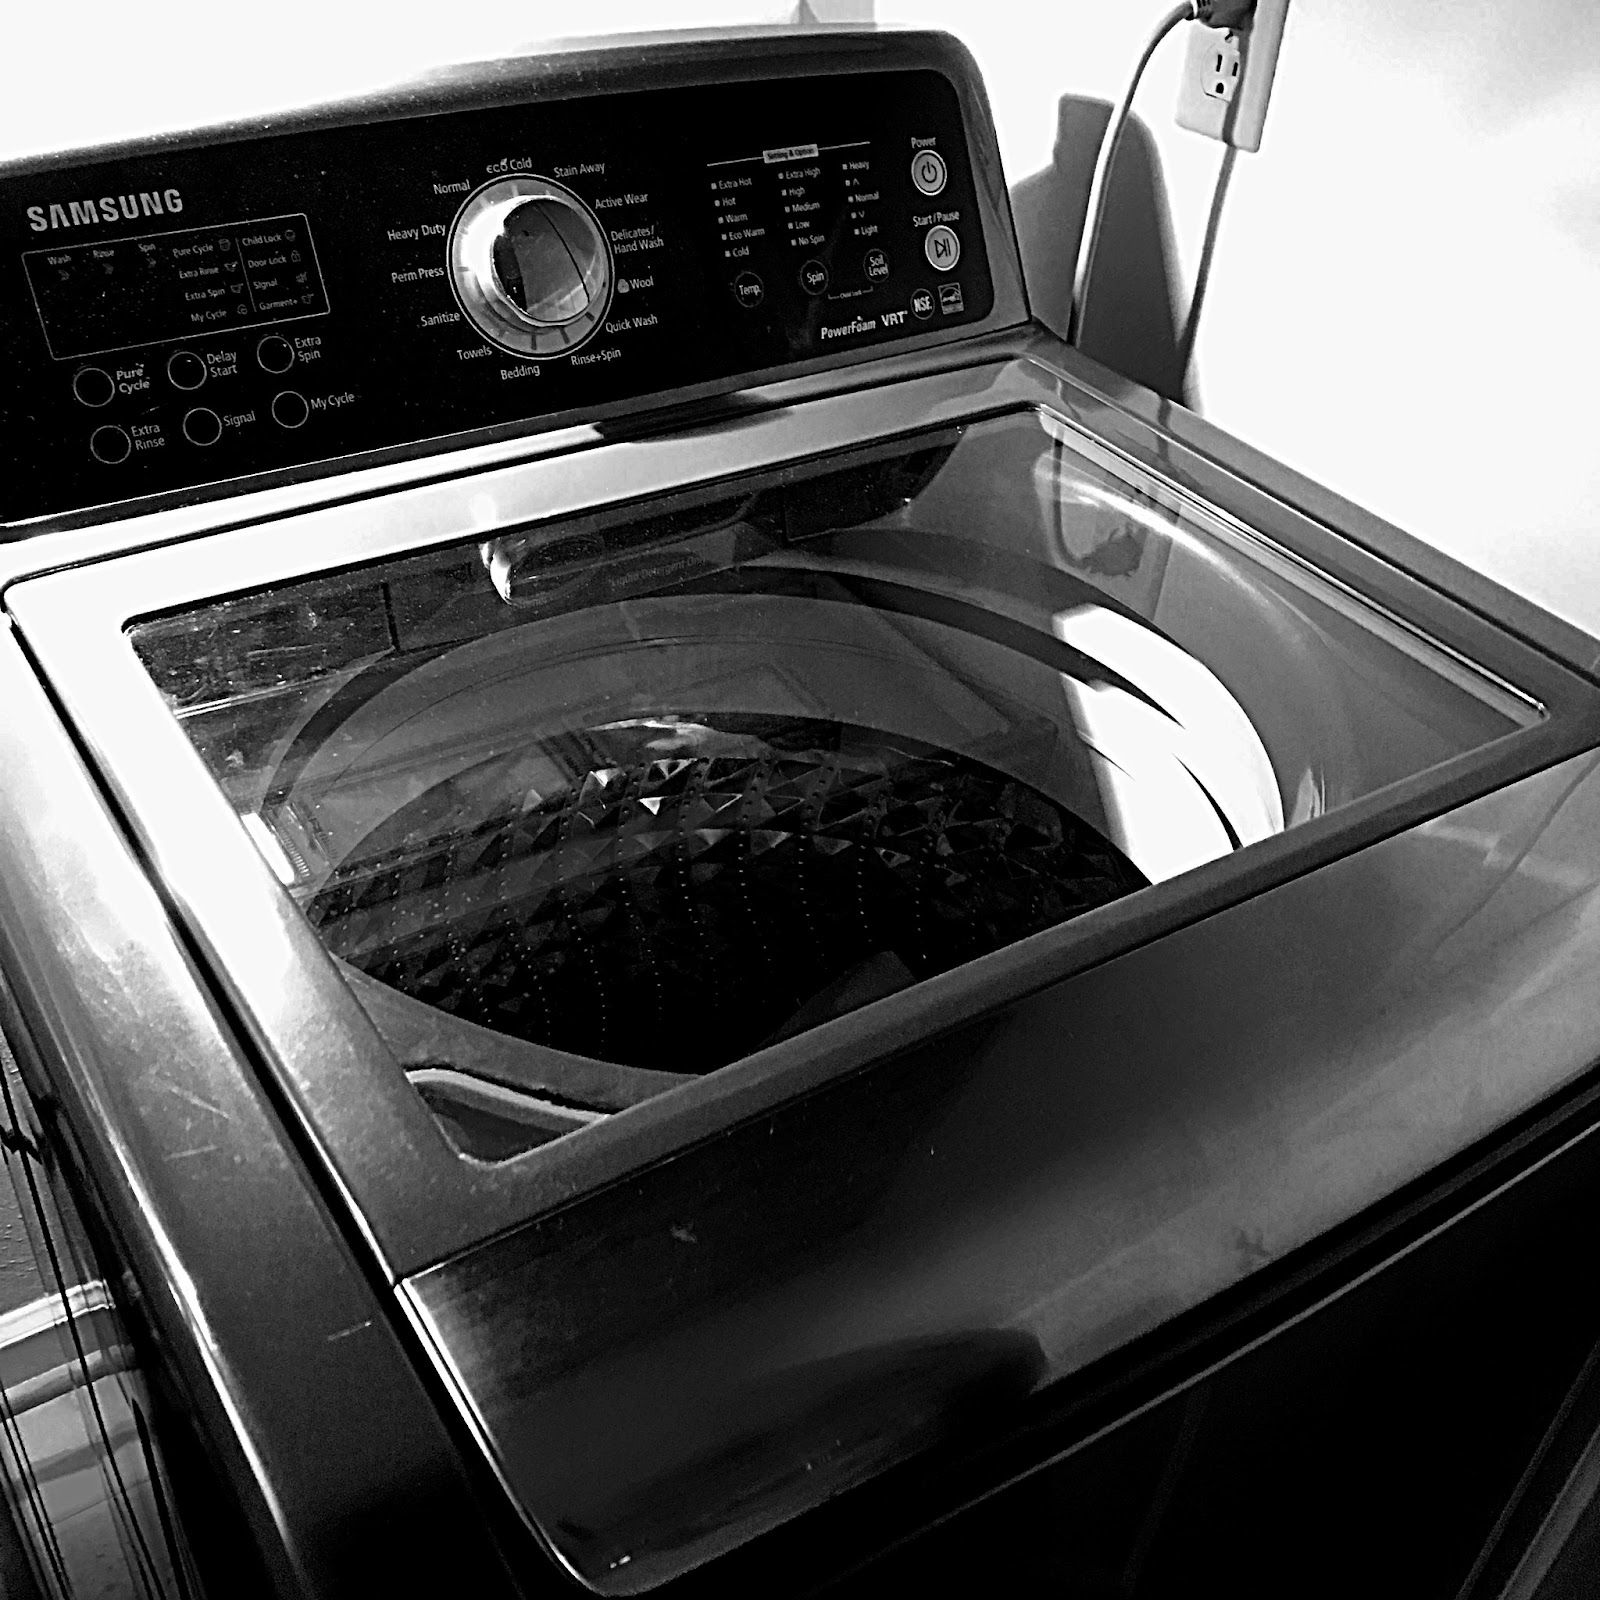 A black top-load washing machine